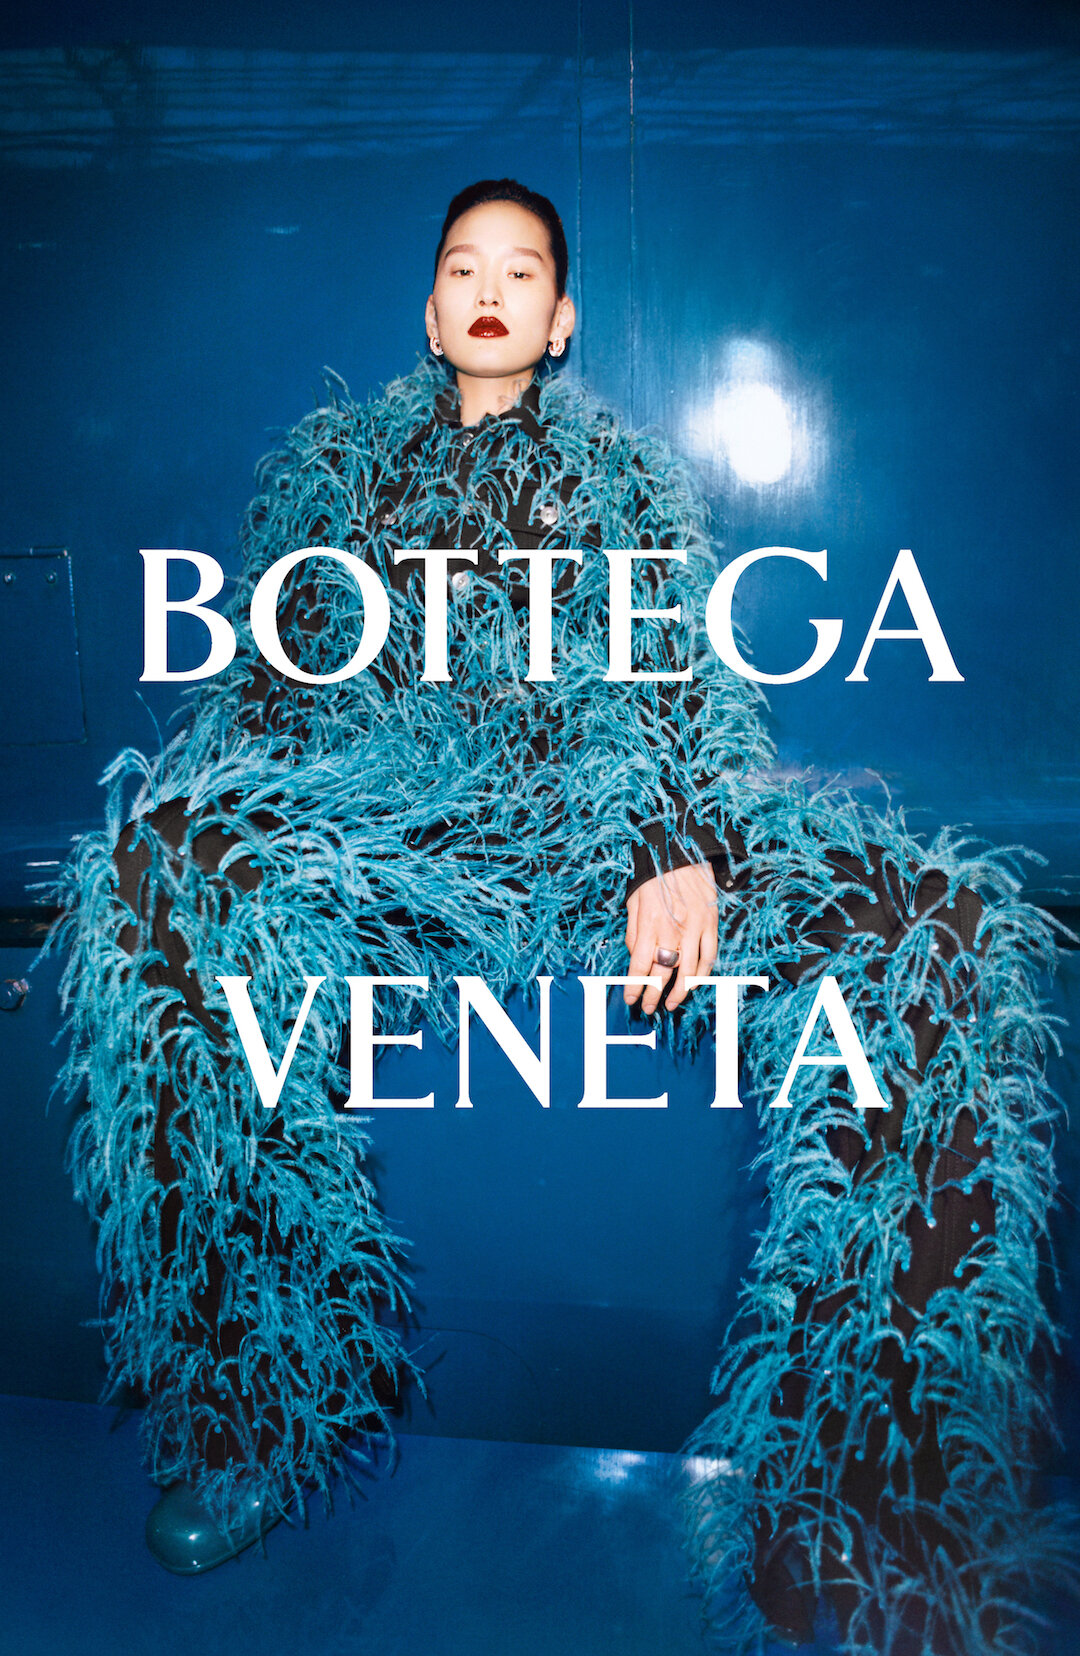 Bottega Veneta Salon 02 Campaign - 01.jpg